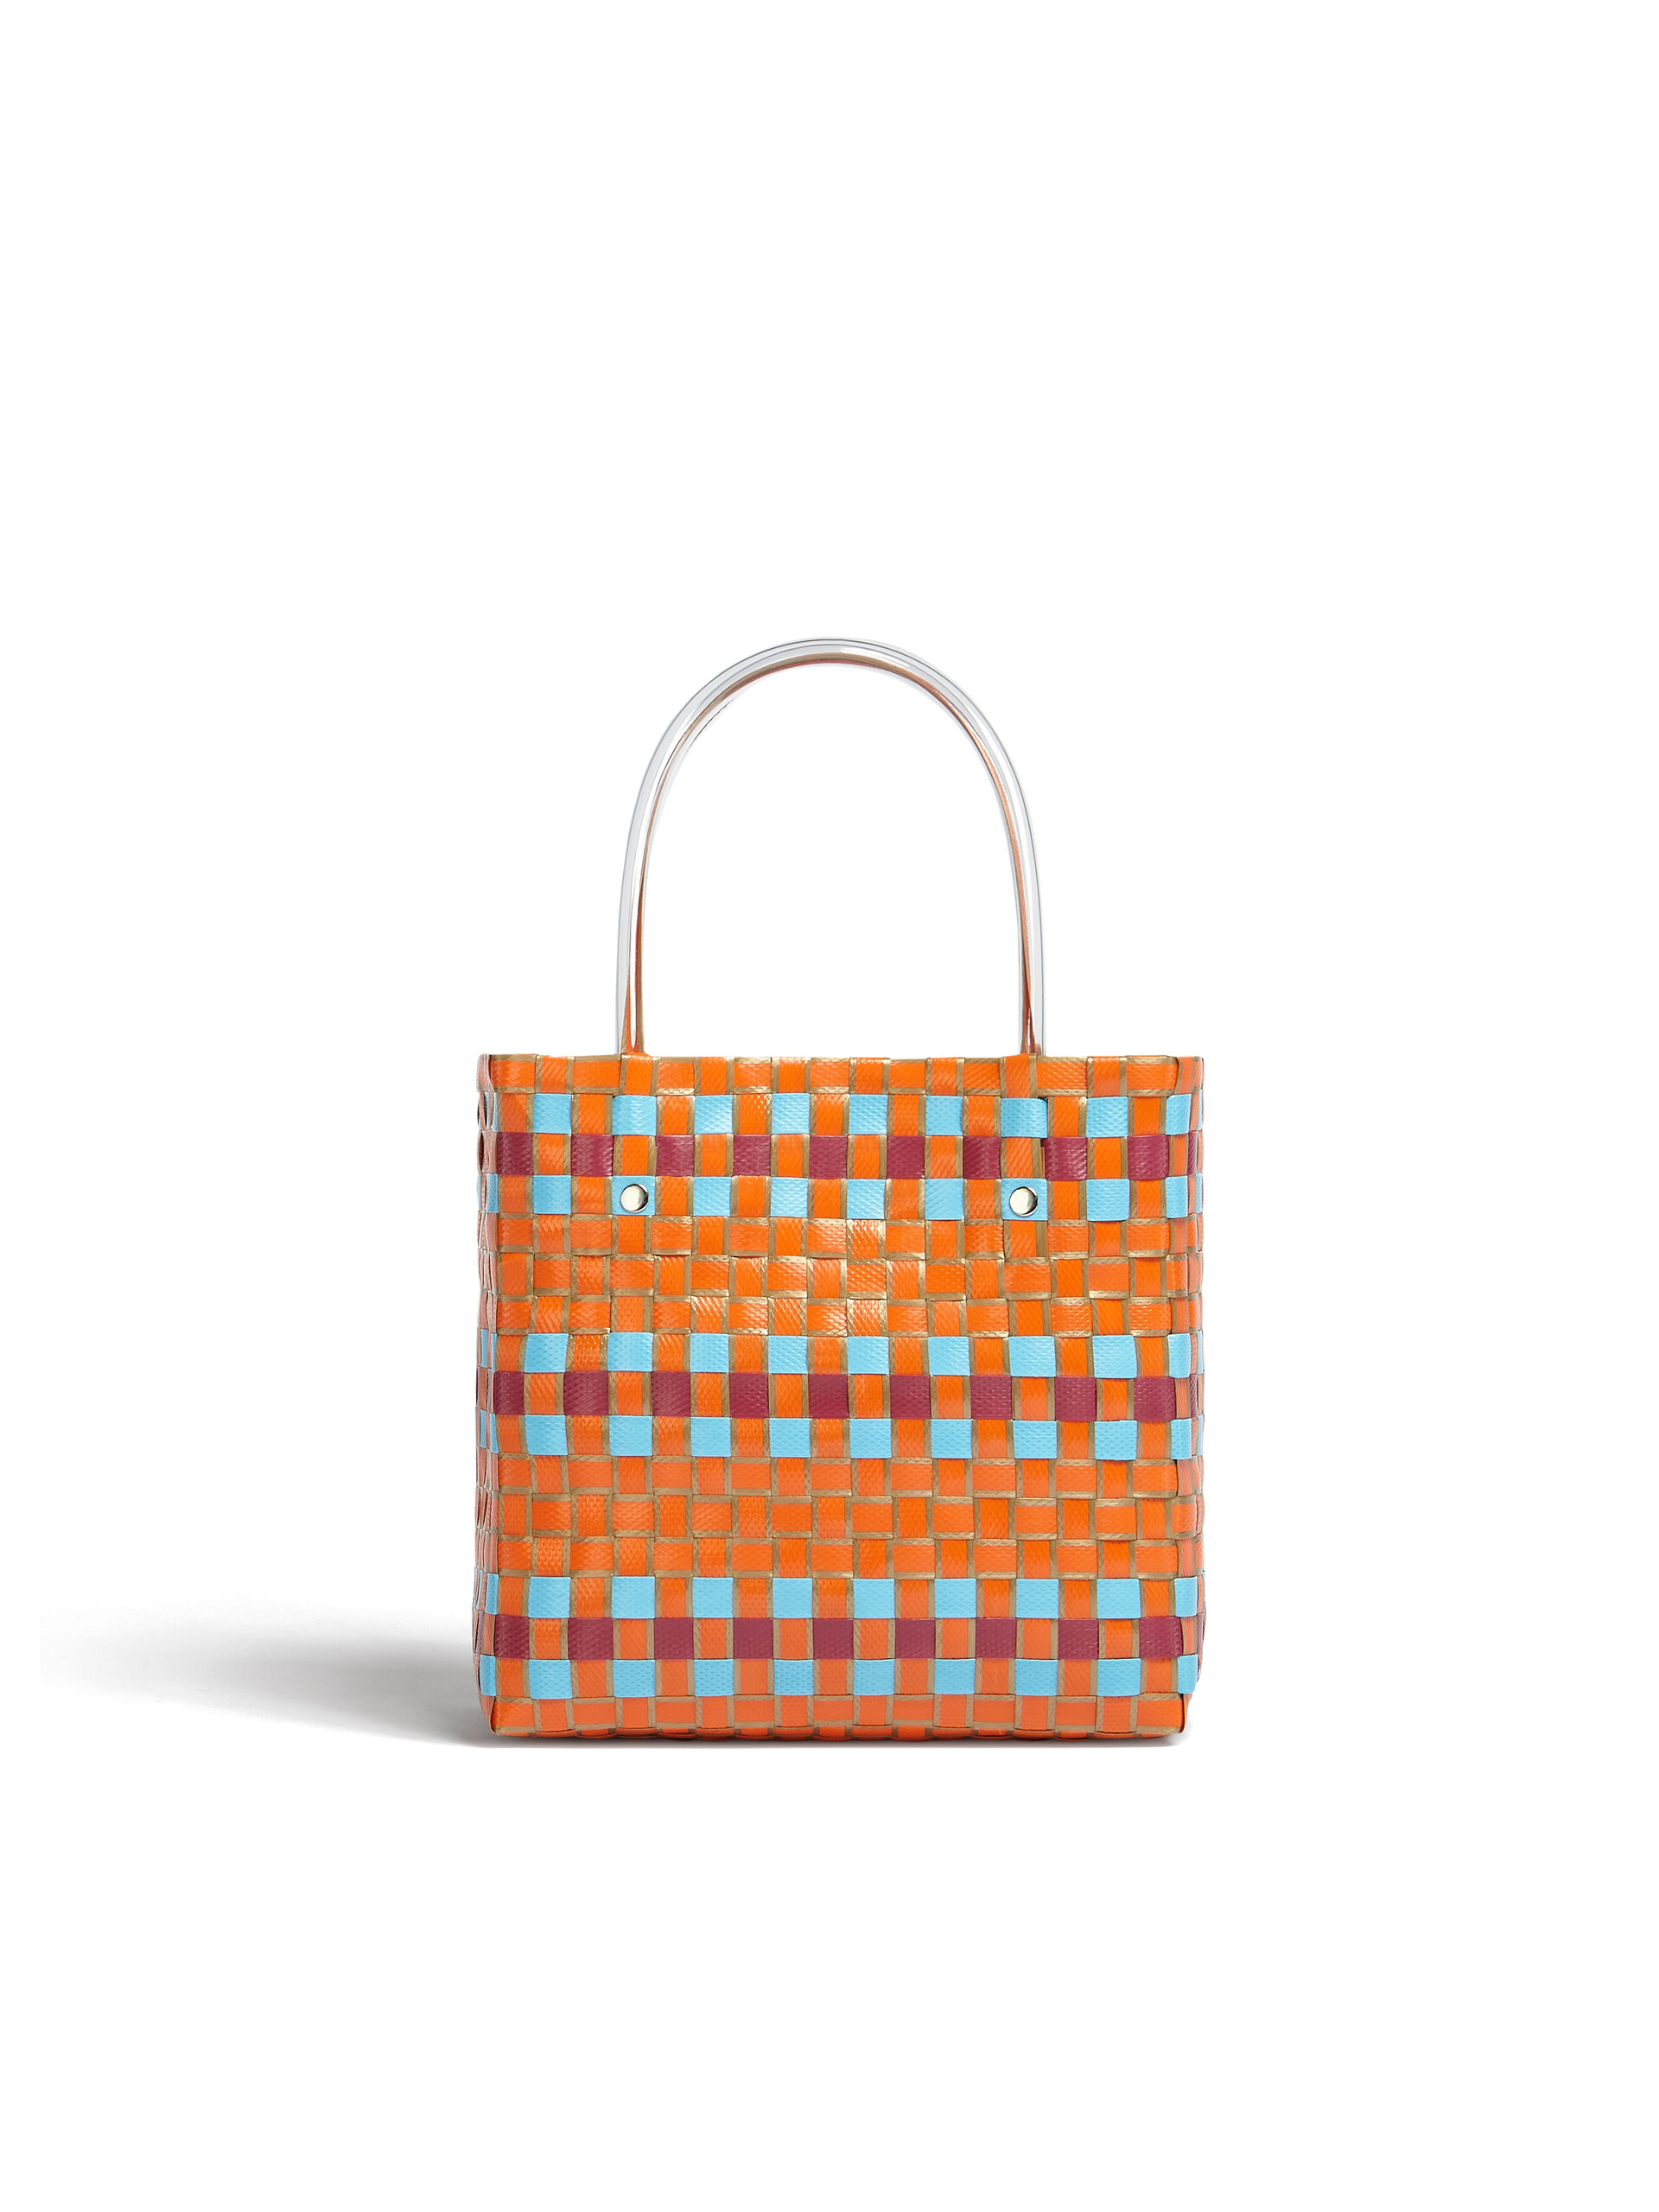 MARNI MARKET BASKET bag in orange woven material - Bags - Image 3